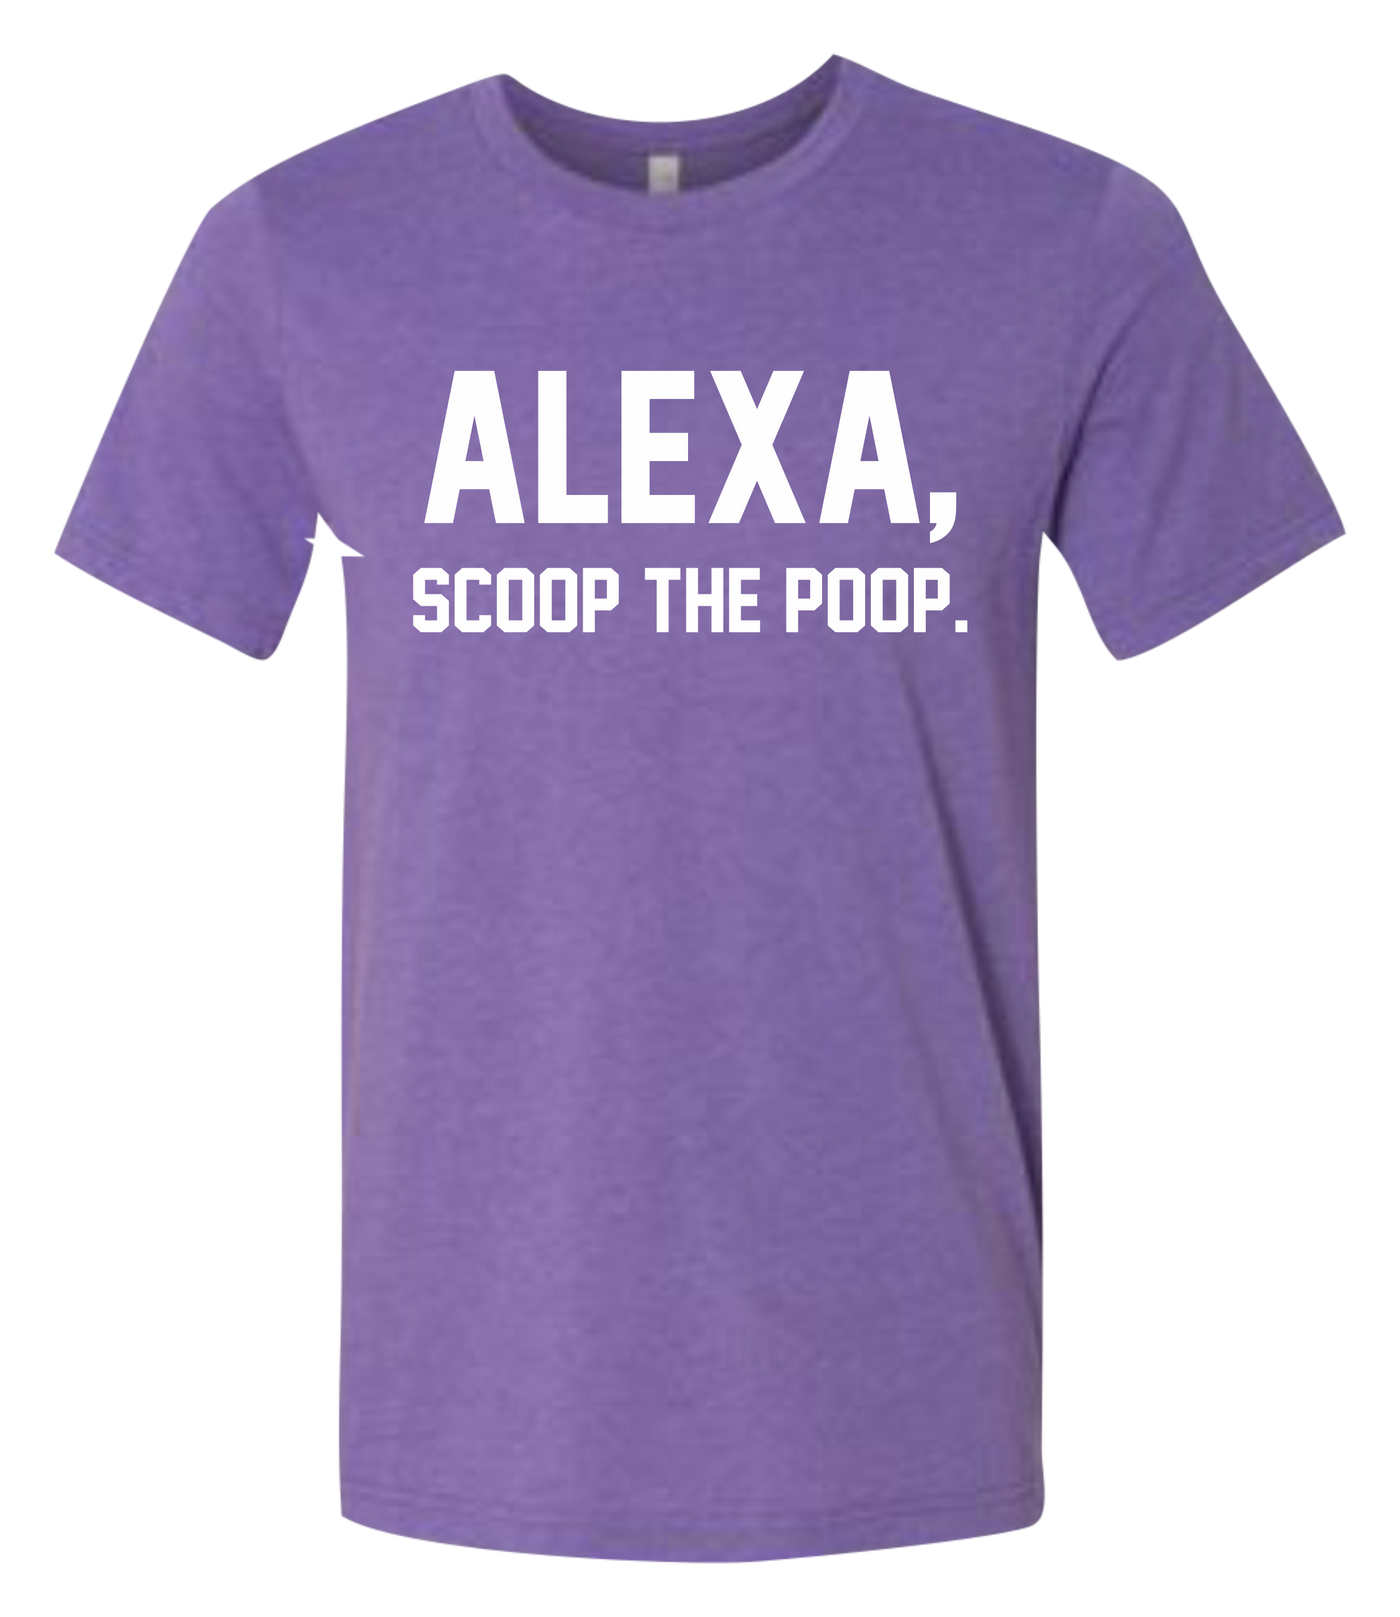 Alexa Request Short-Sleeve Graphic T-shirt